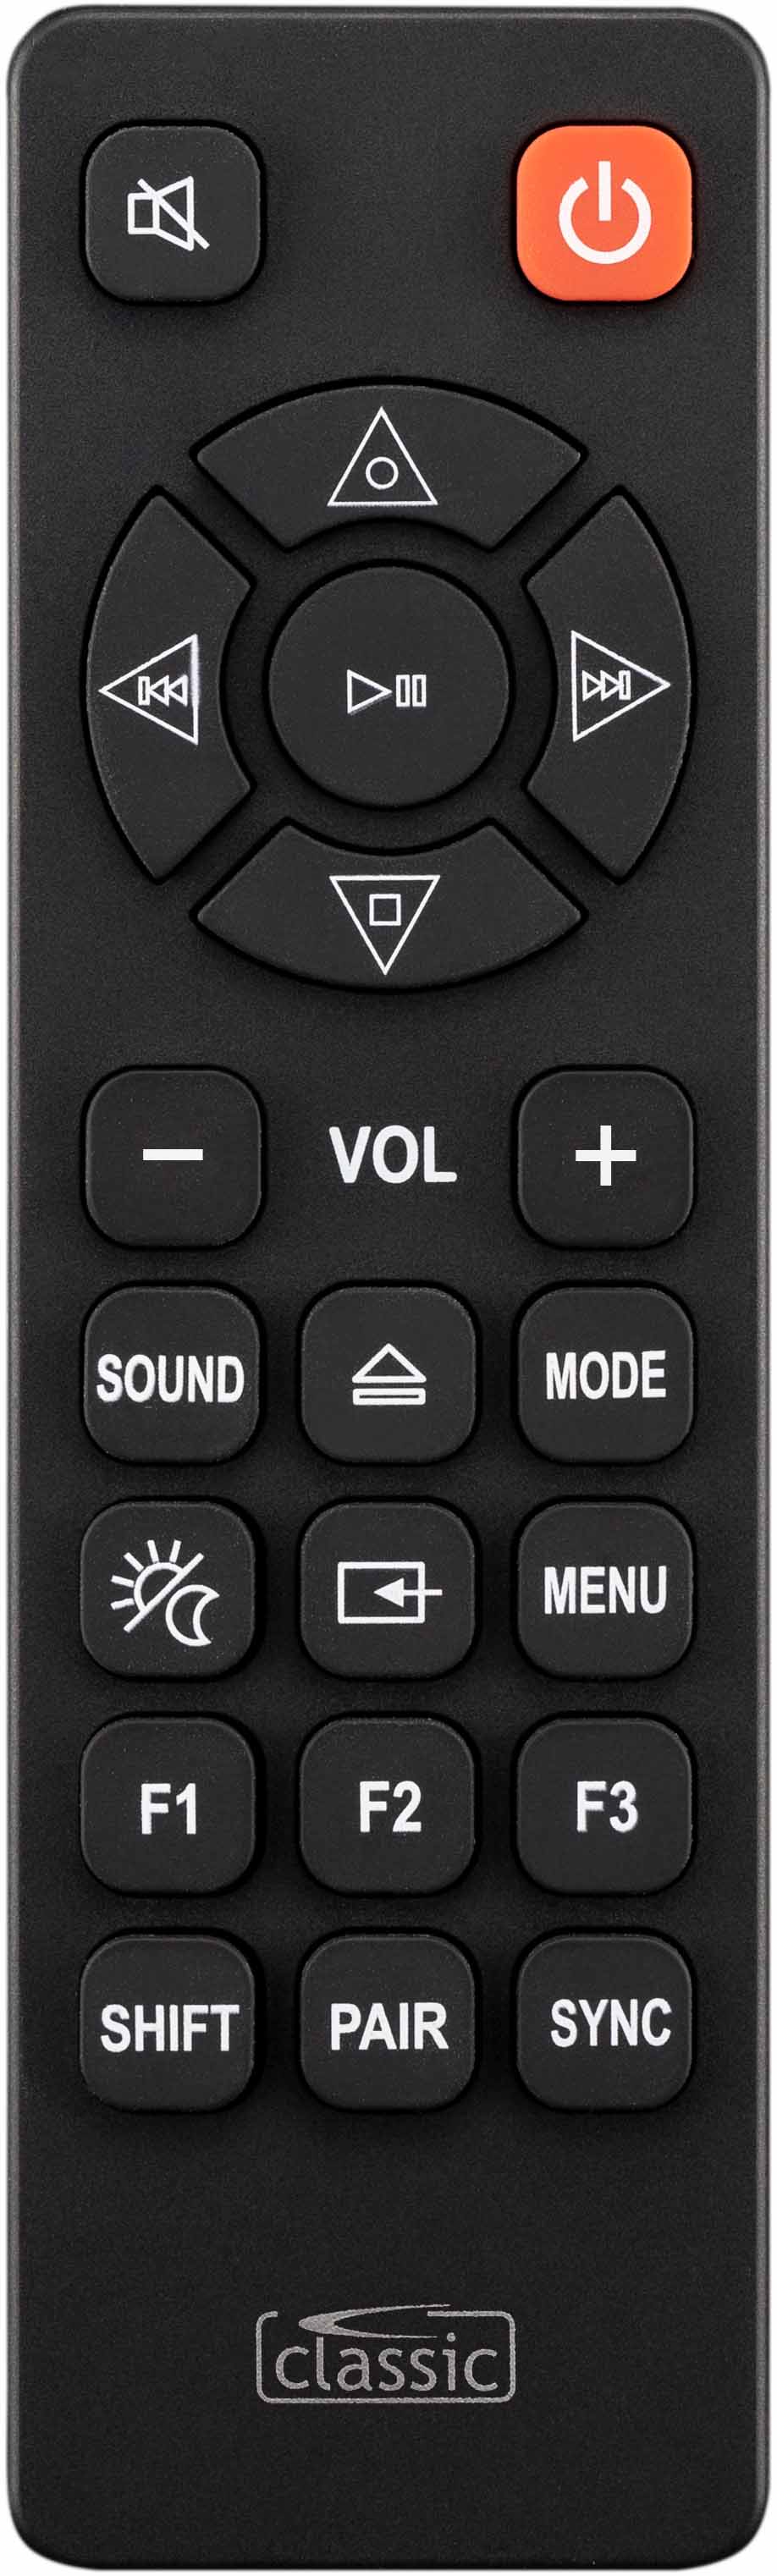 JVC TH-D357B Remote Control Alternative